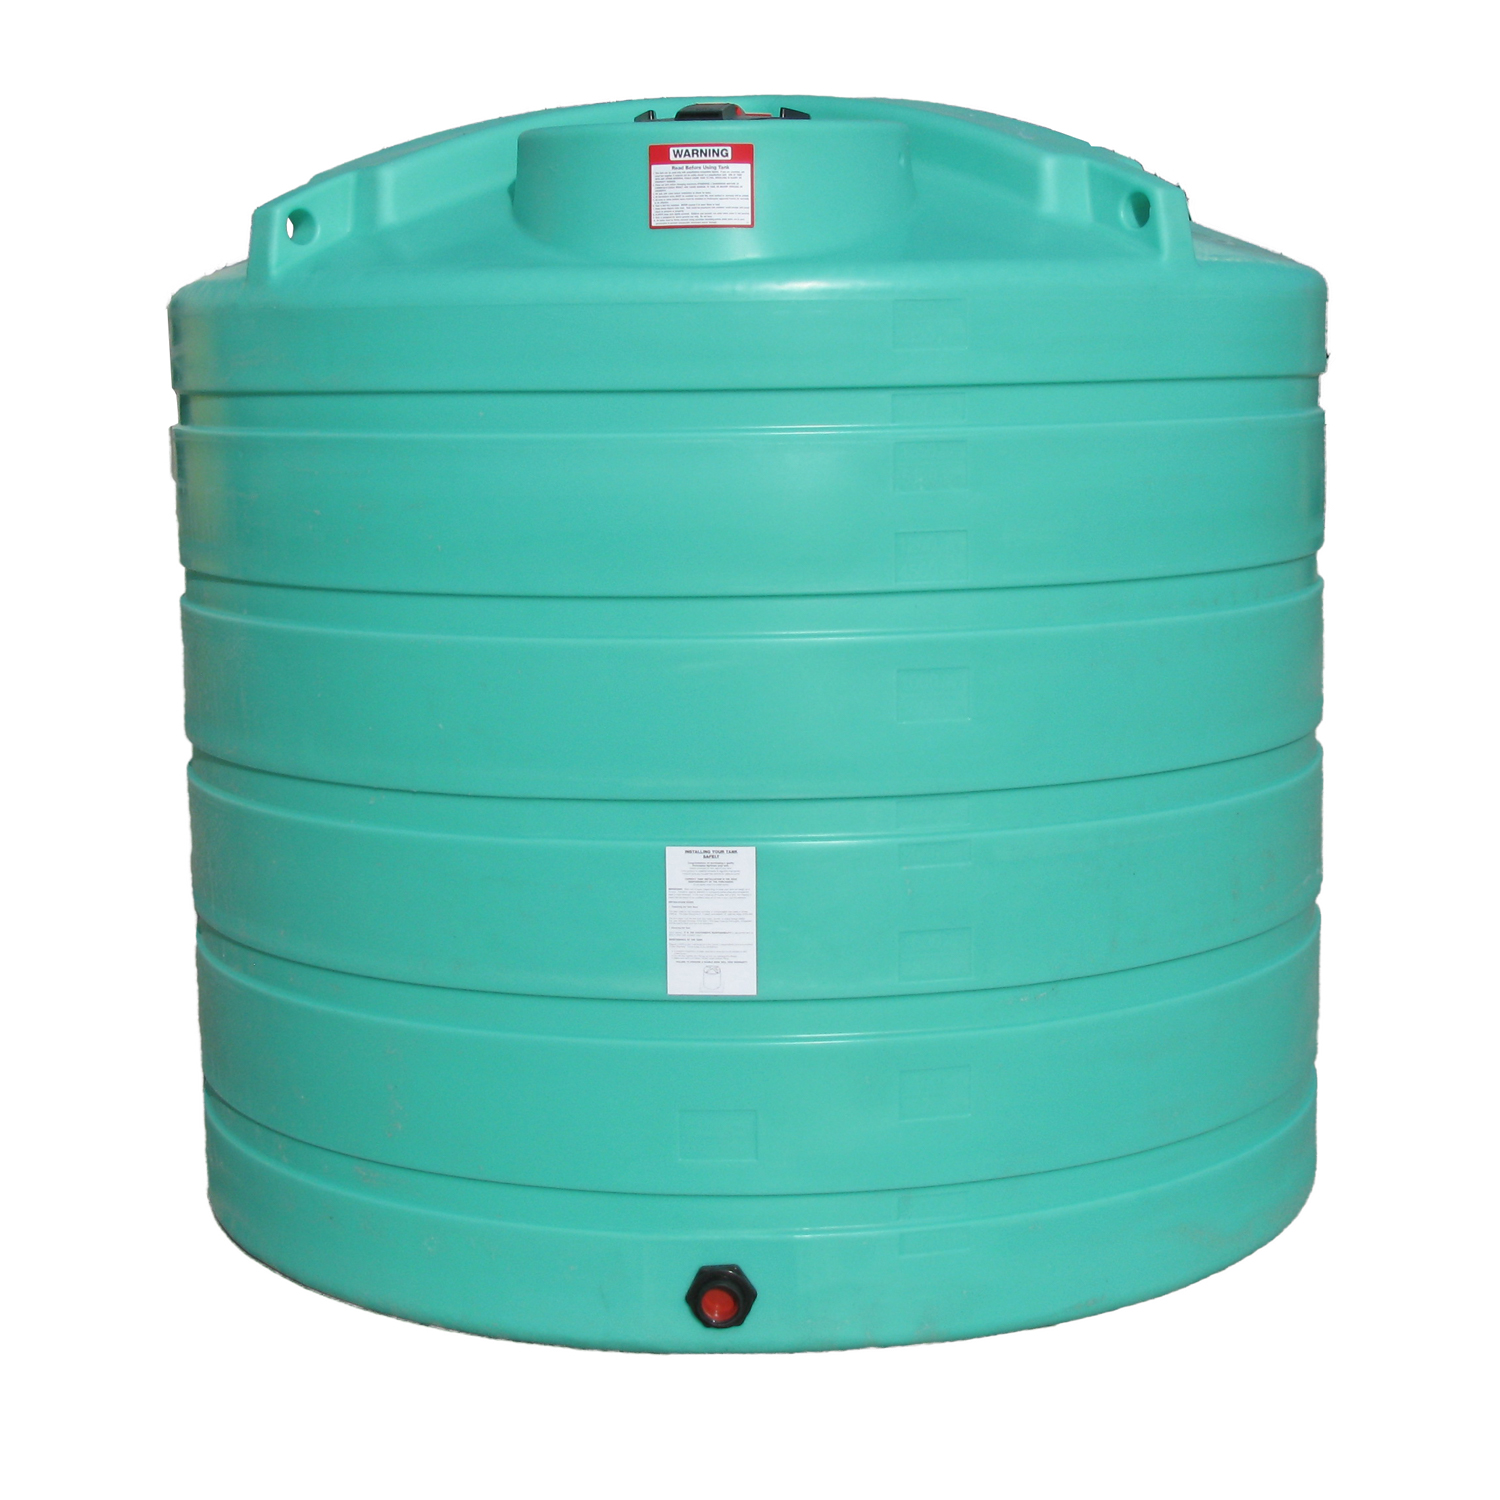 Enduraplas 1,550 Gallon Flat Bottom Storage Tank